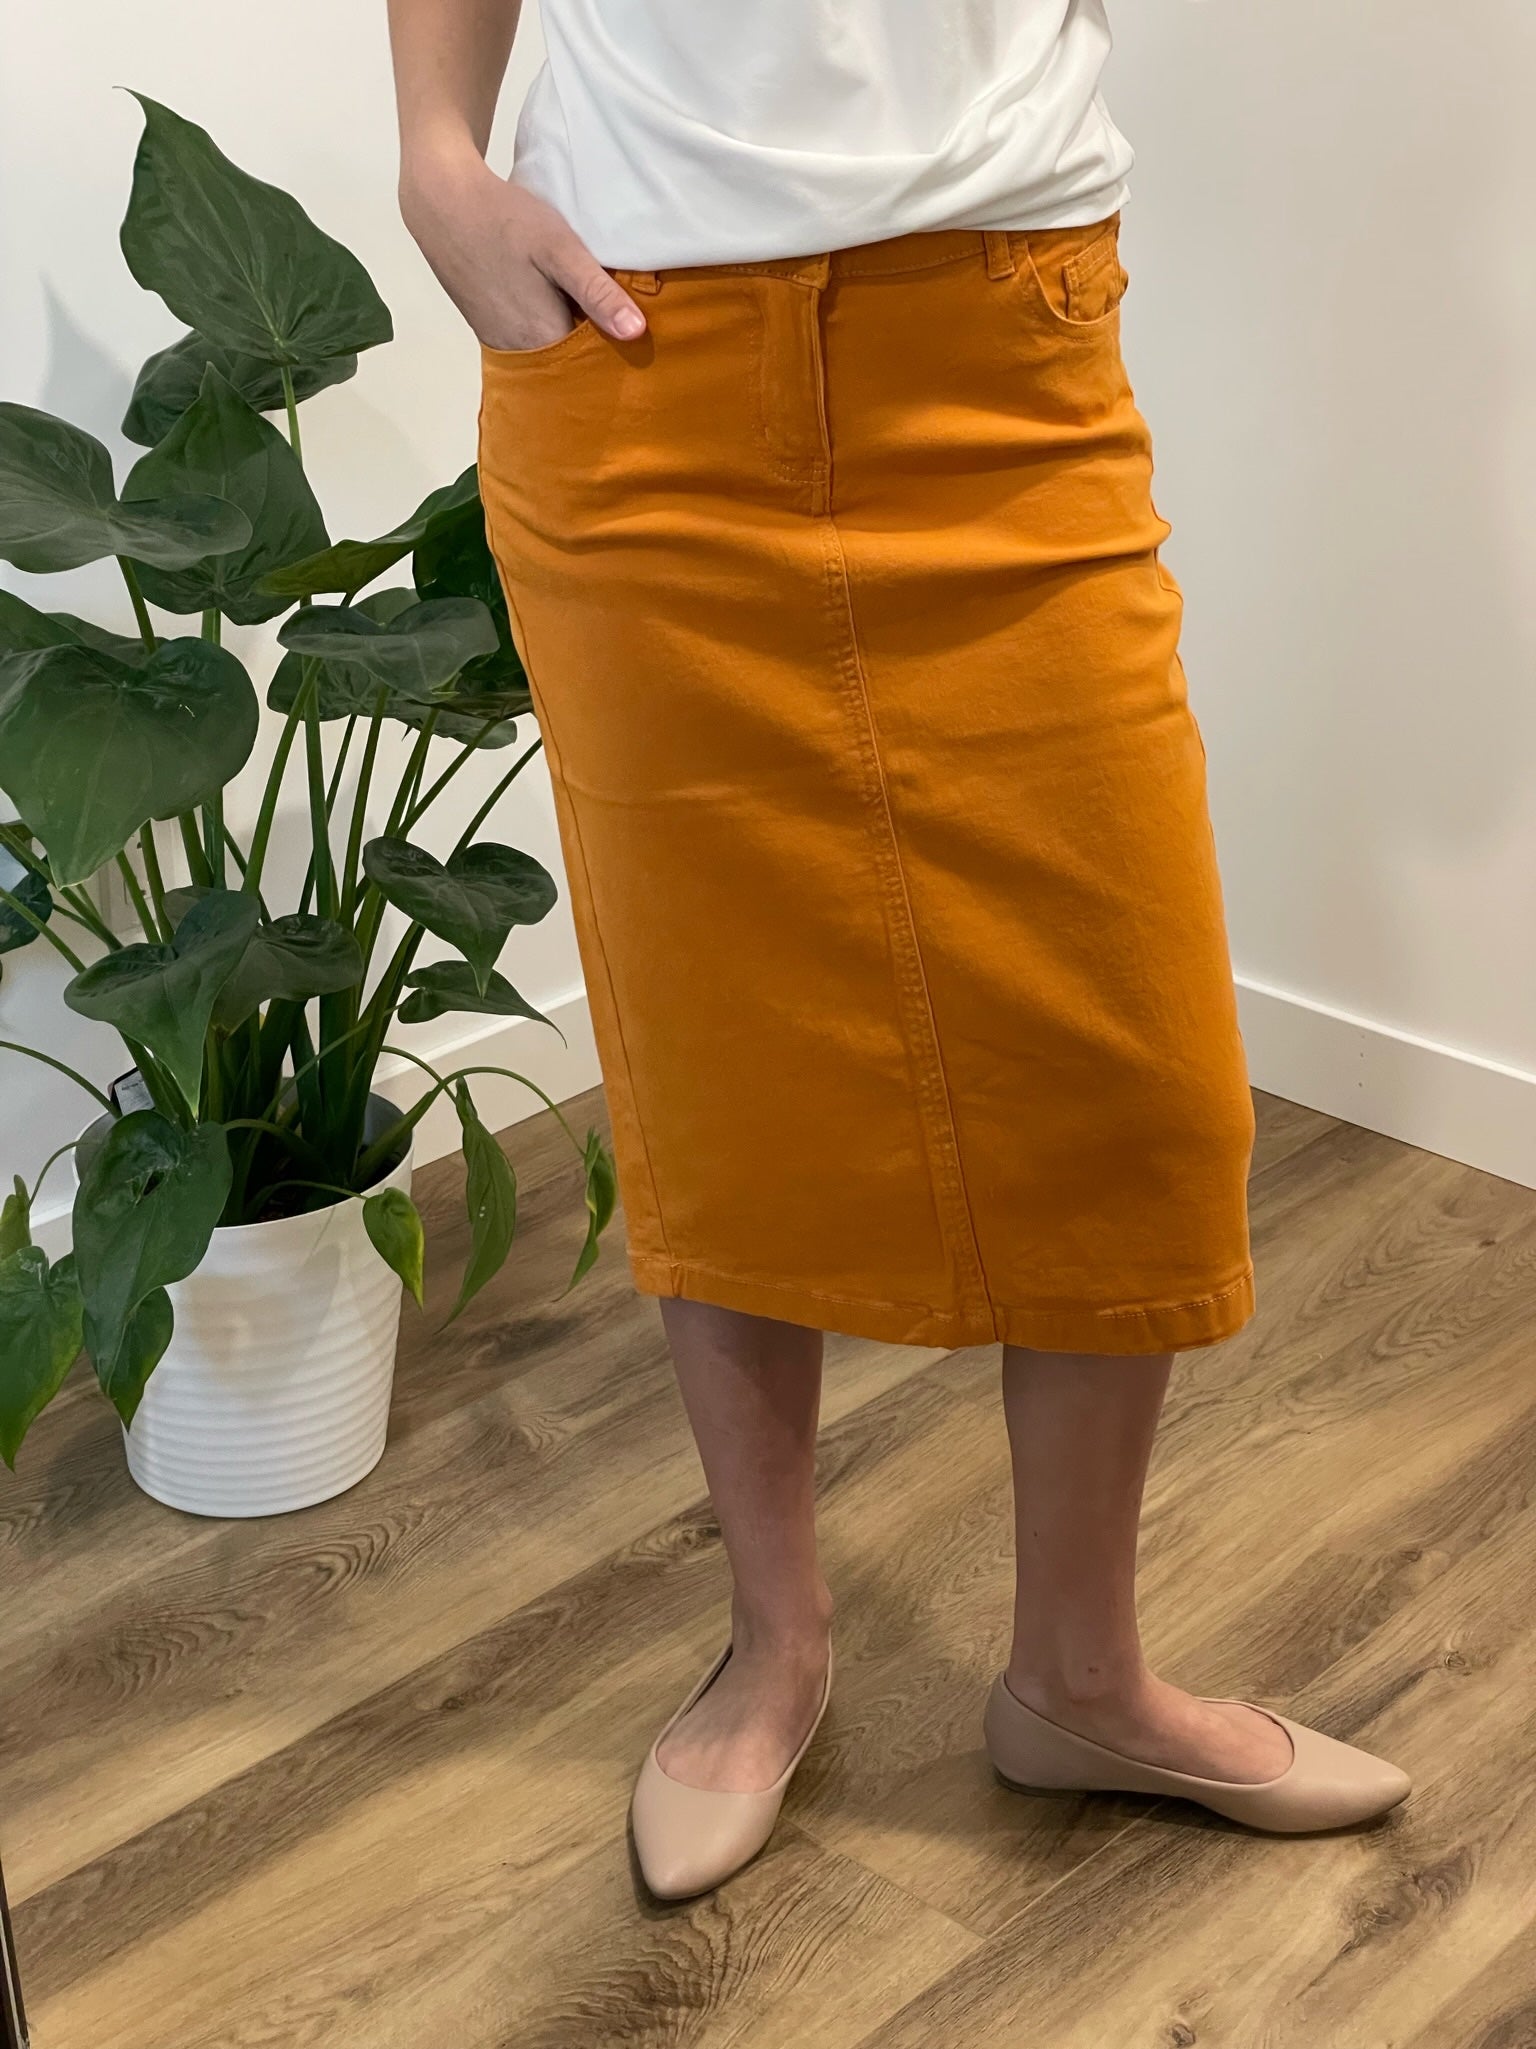 Mud Jeans Sophie Rocks women's yellow denim skirt S | eBay